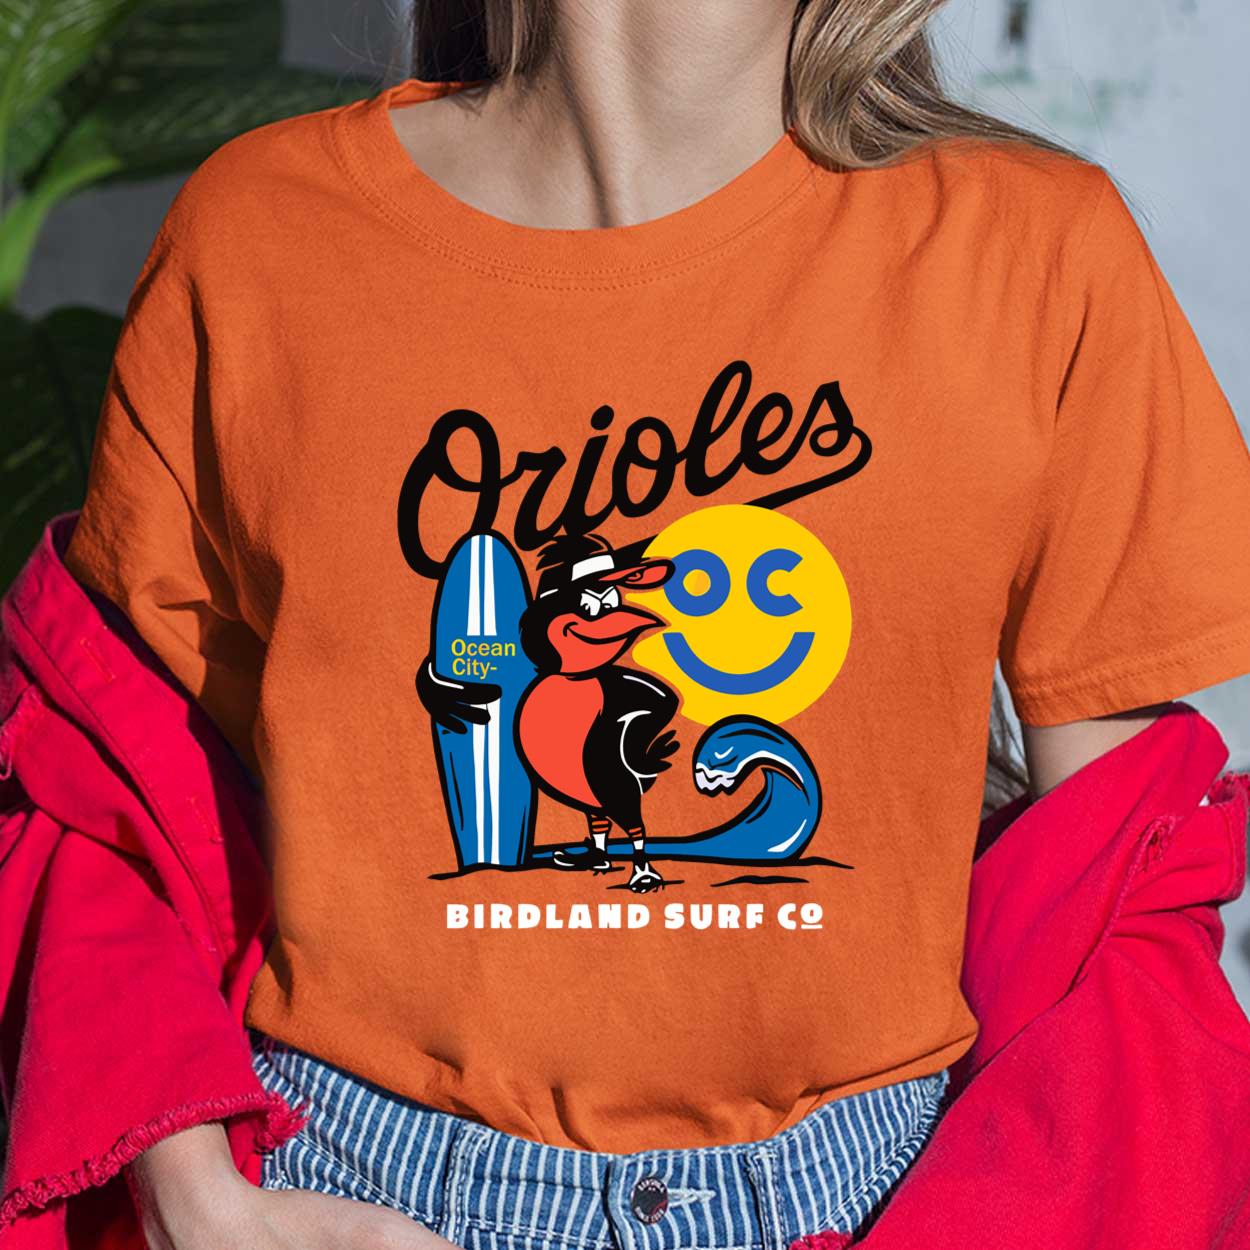 2023 Baltimore Orioles Giveaway Sweatshirt 